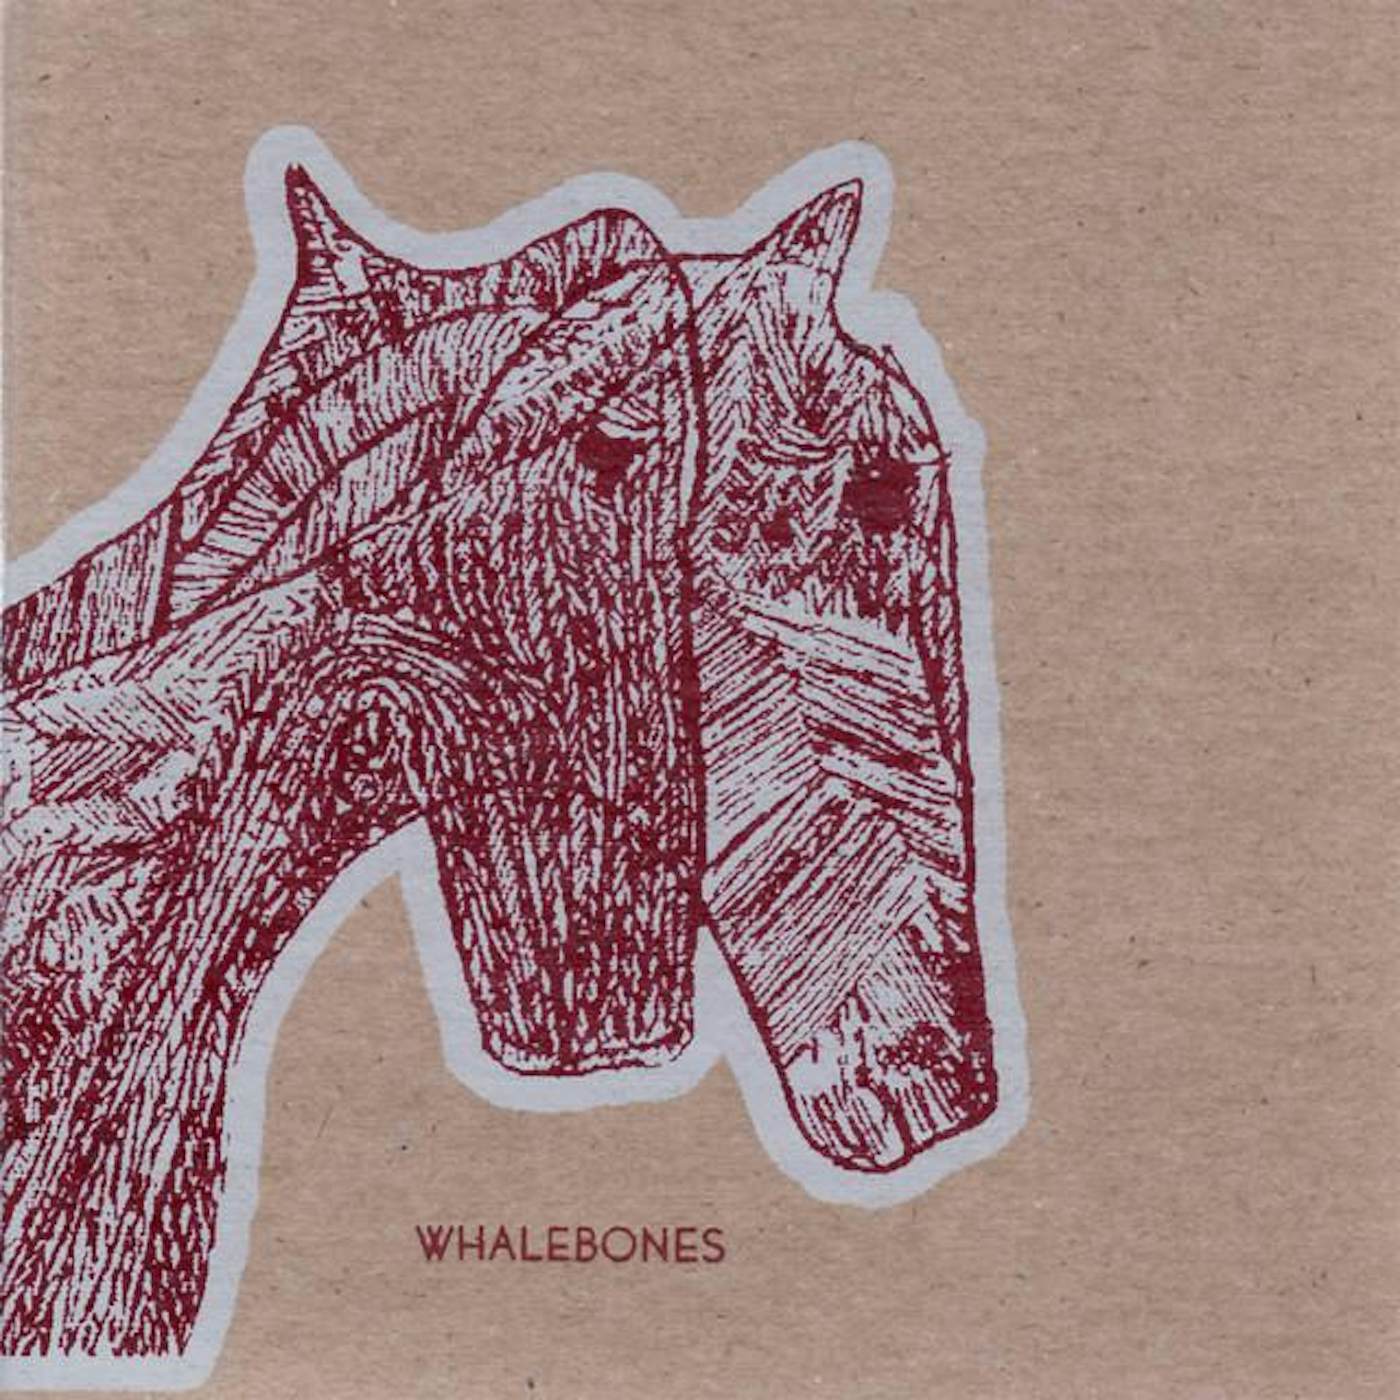 Whalebones